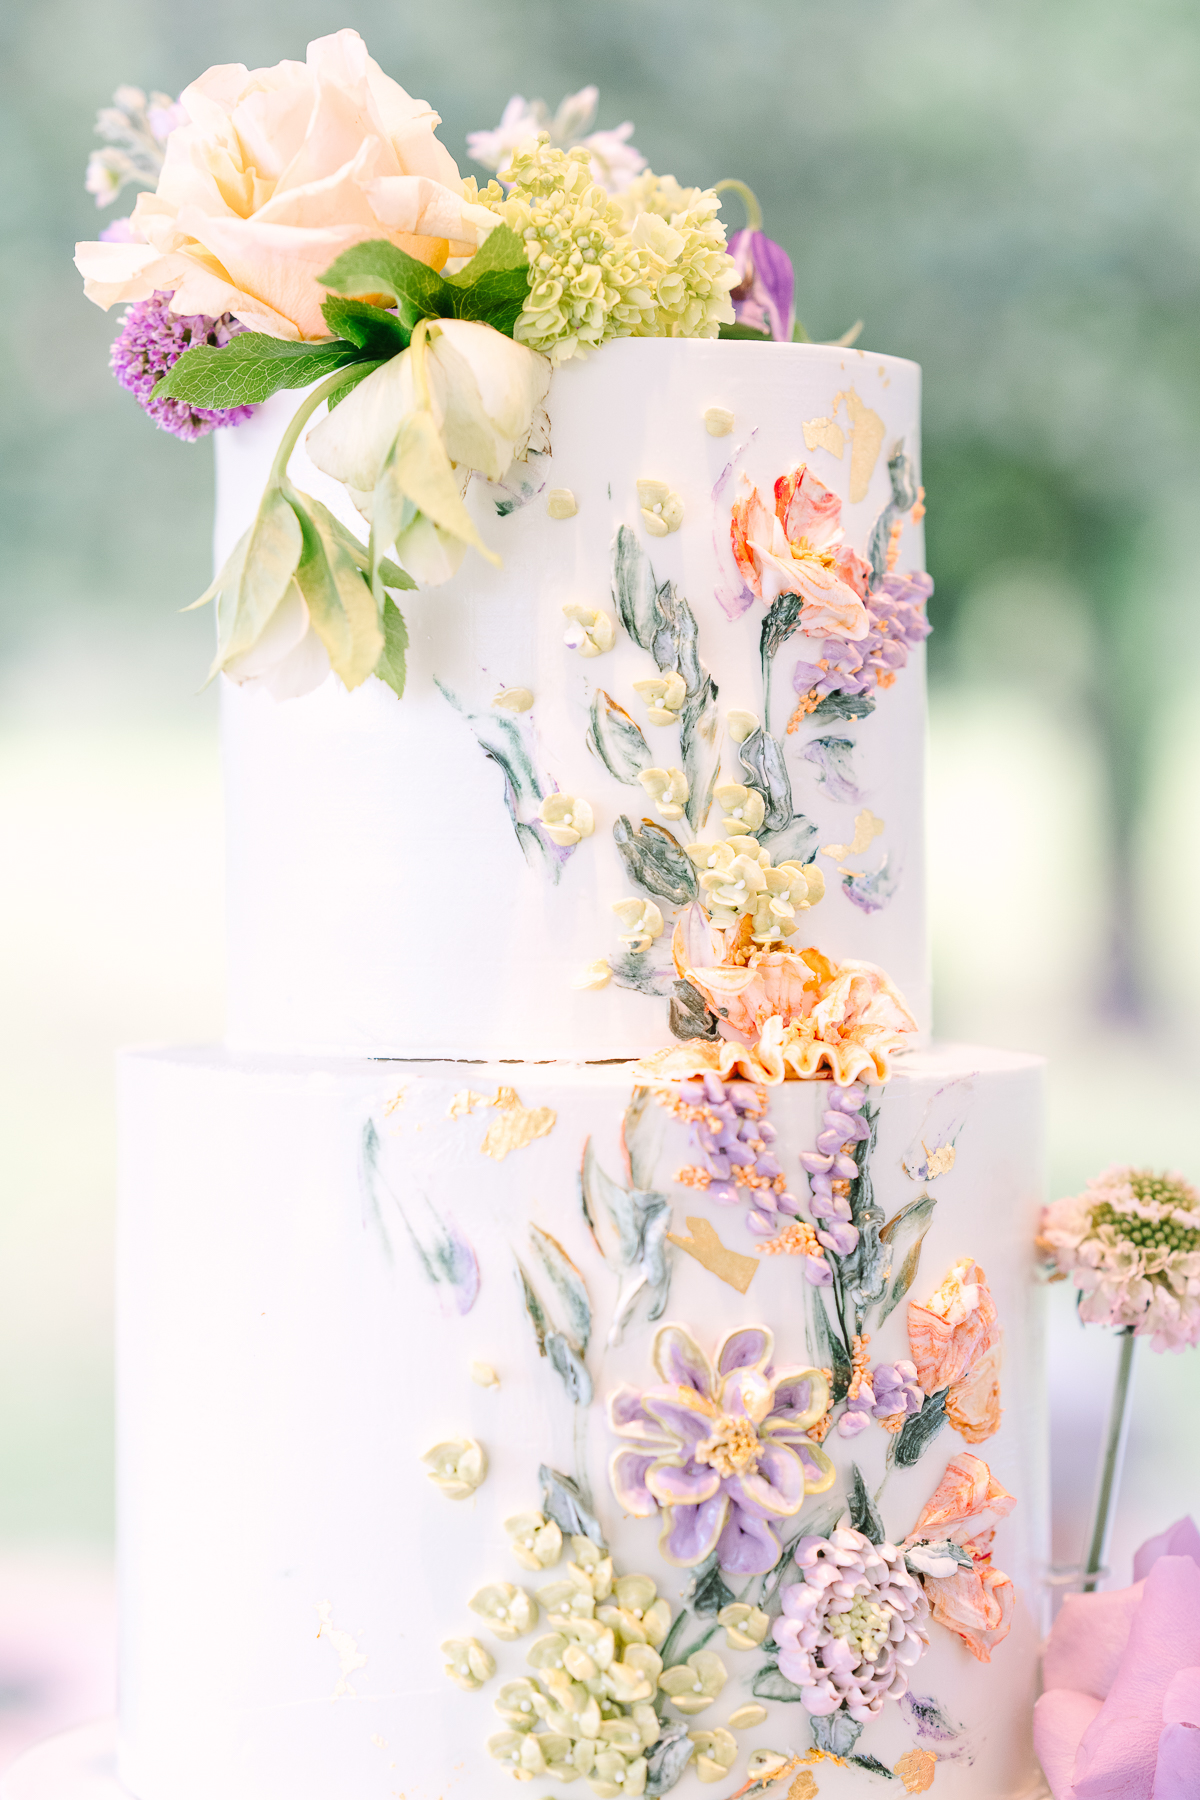 Sukar Cakes Wedding Cake